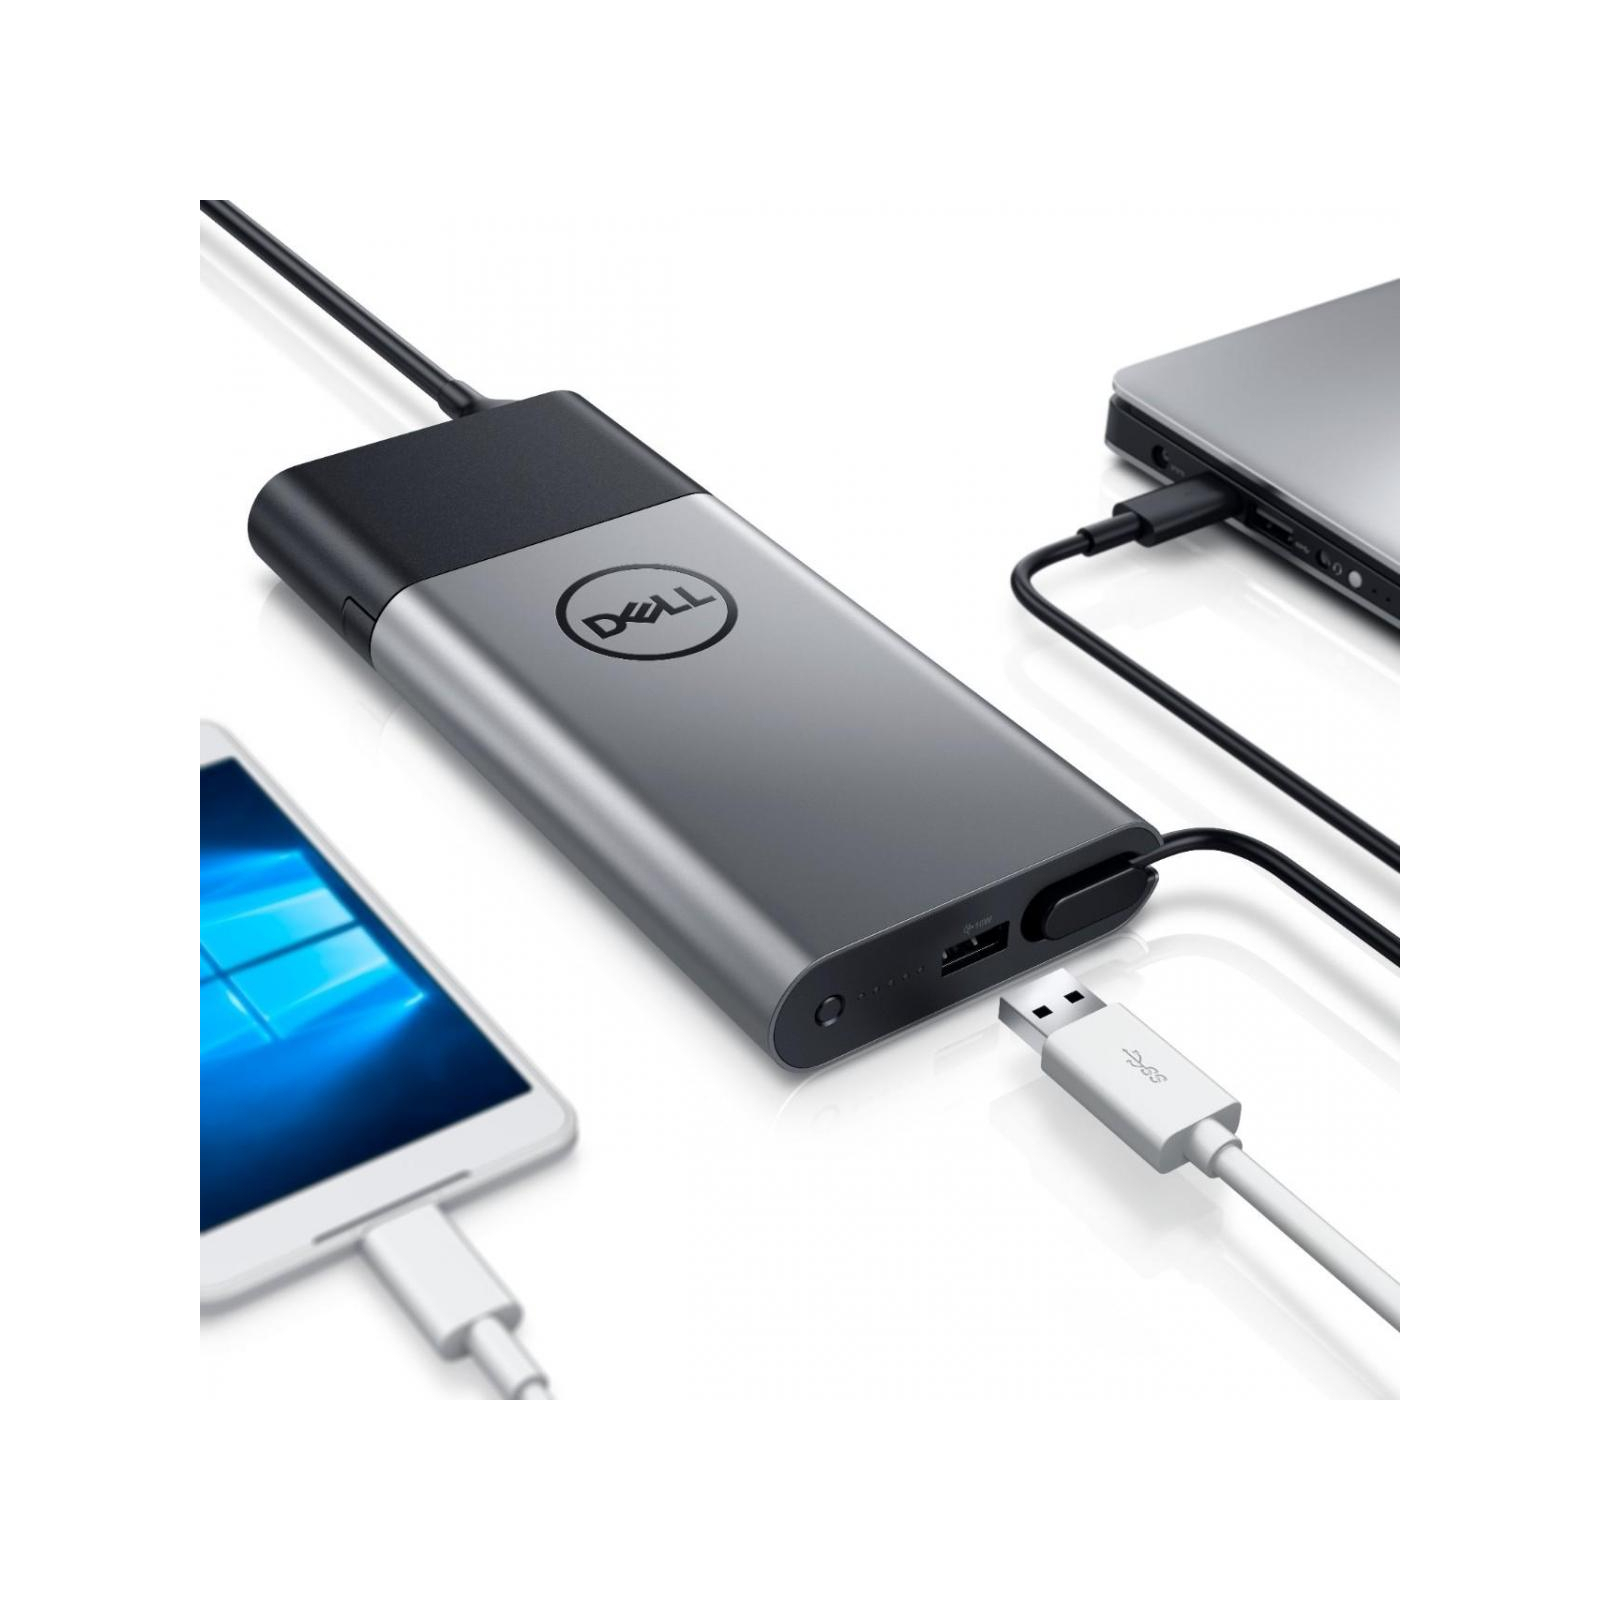 Батарея универсальная Dell Hybrid Adapter + Power Bank USB-C 12800mAh (450-AGHQ) изображение 3